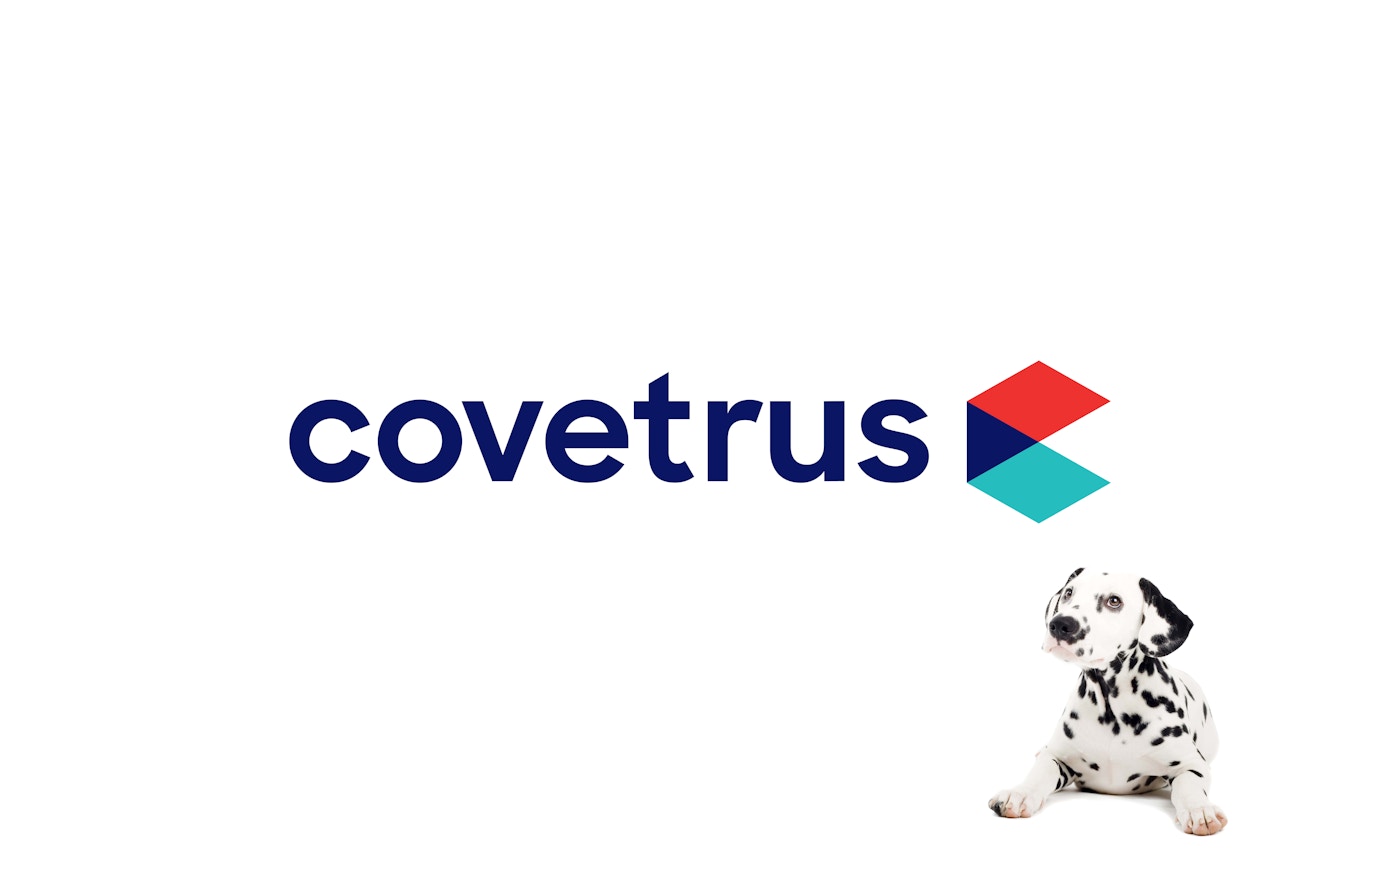 New Covetrus logo, designed by Lippincott